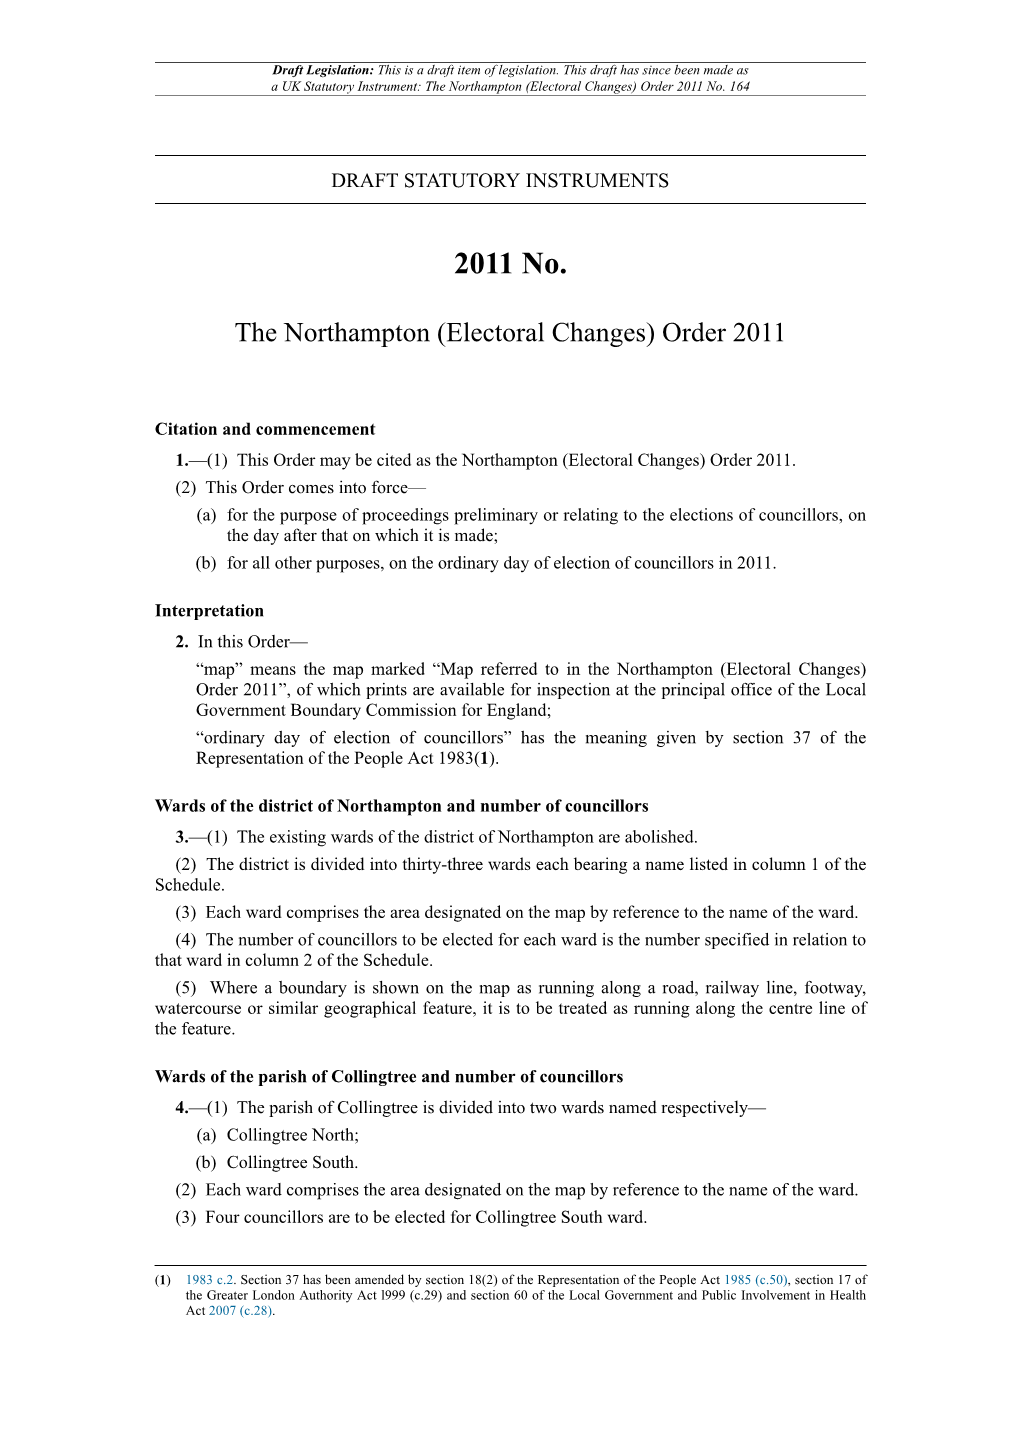 The Northampton (Electoral Changes) Order 2011 No